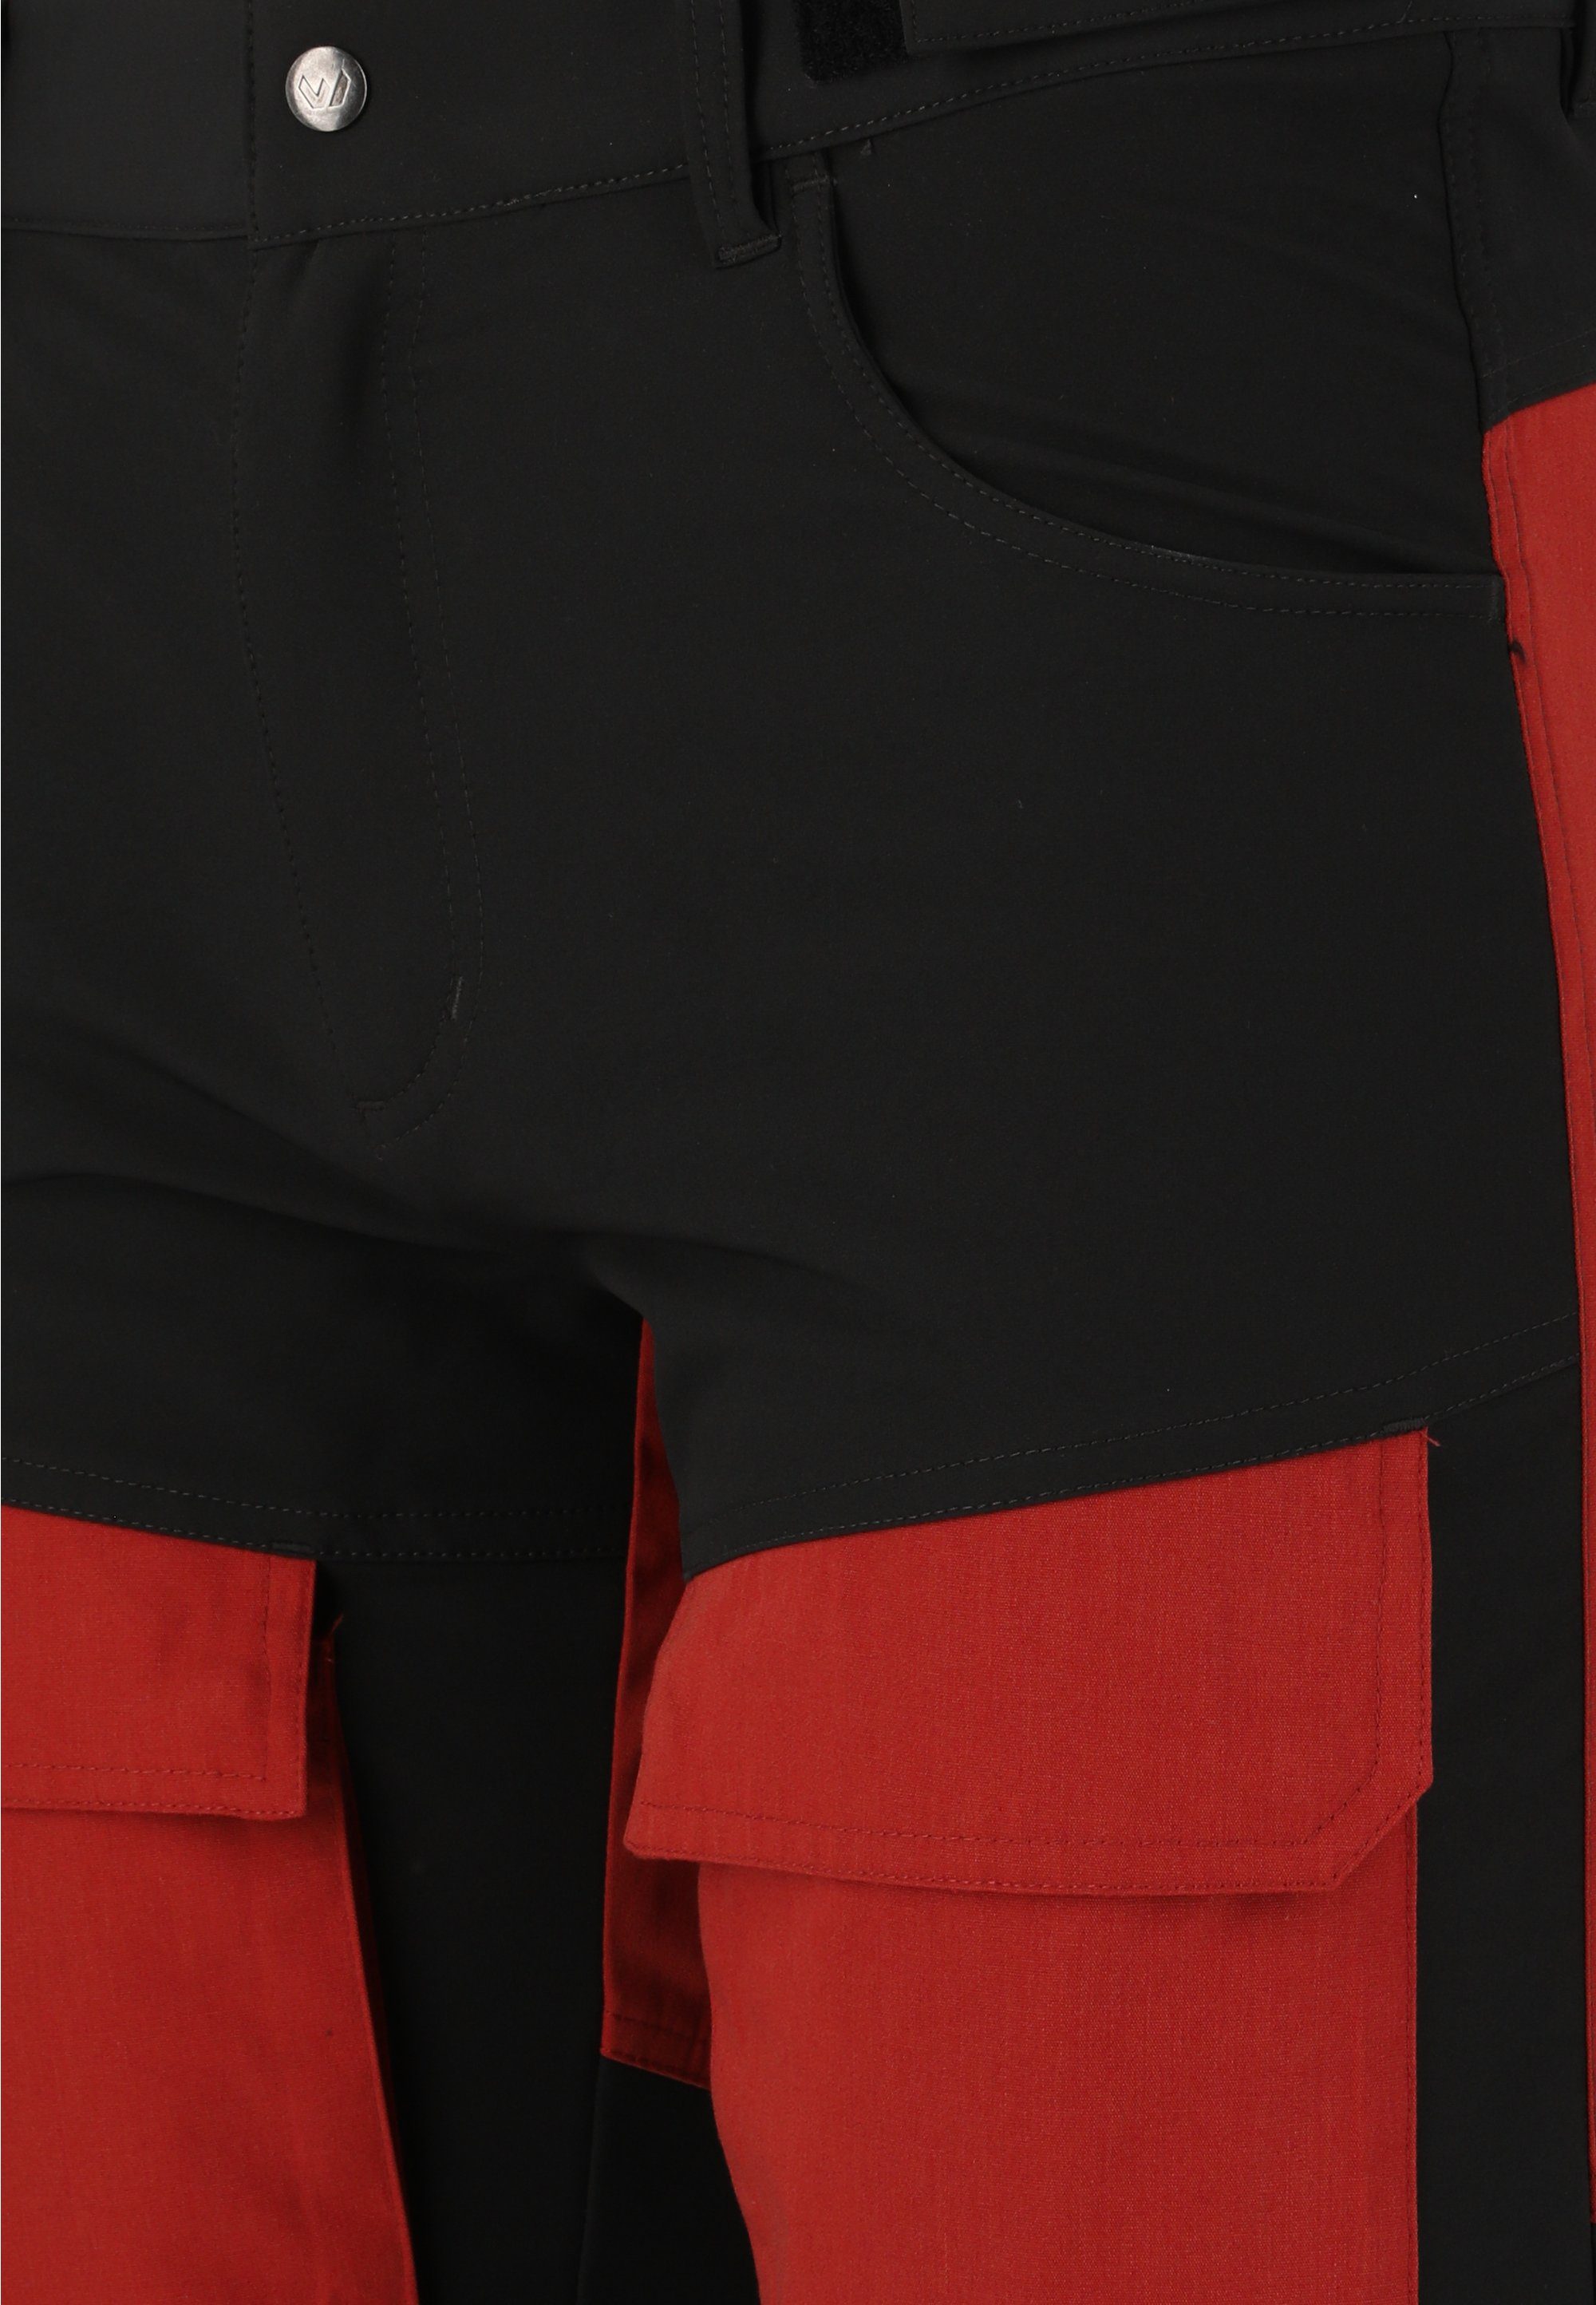 ERIC schwarz-rot mit Shorts WHISTLER atmungsaktivem Funktionsstretch